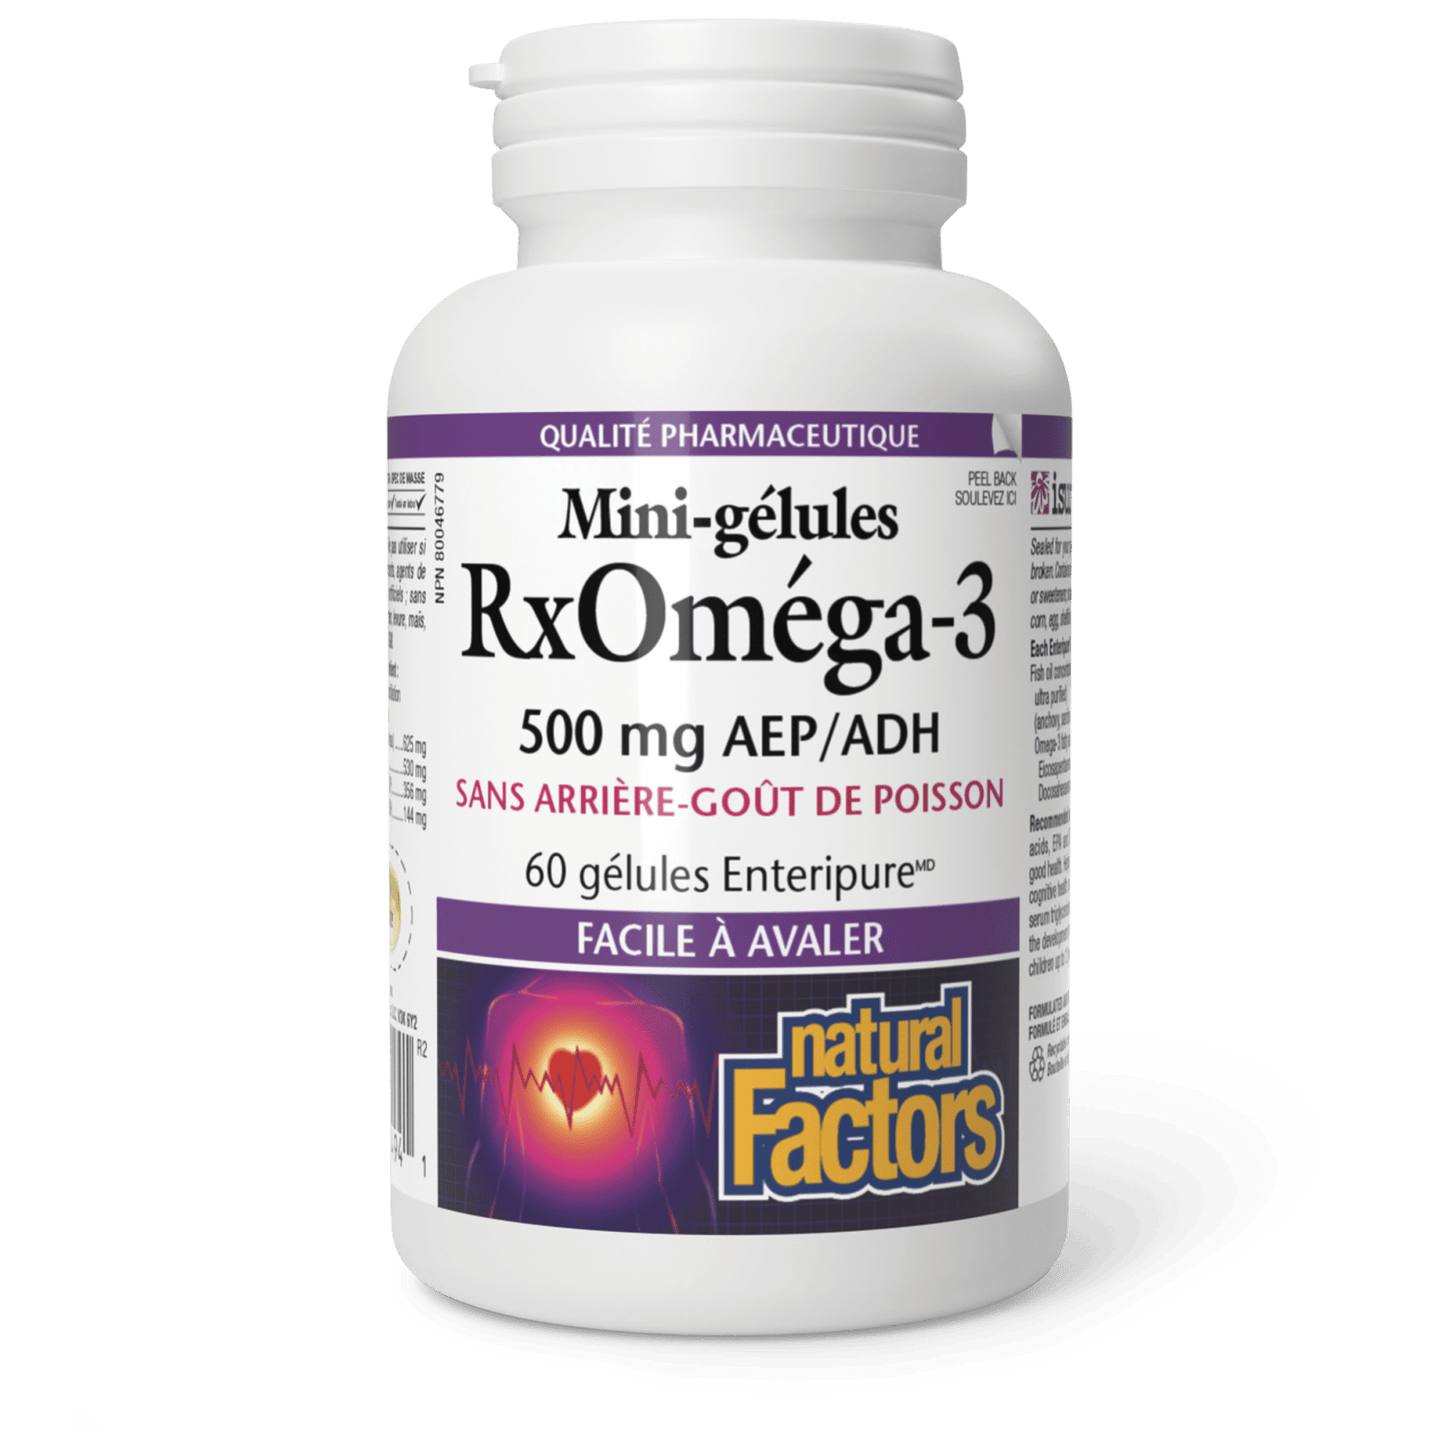 RxOméga-3 Mini-gélules 500 mg, Natural Factors|v|image|35494